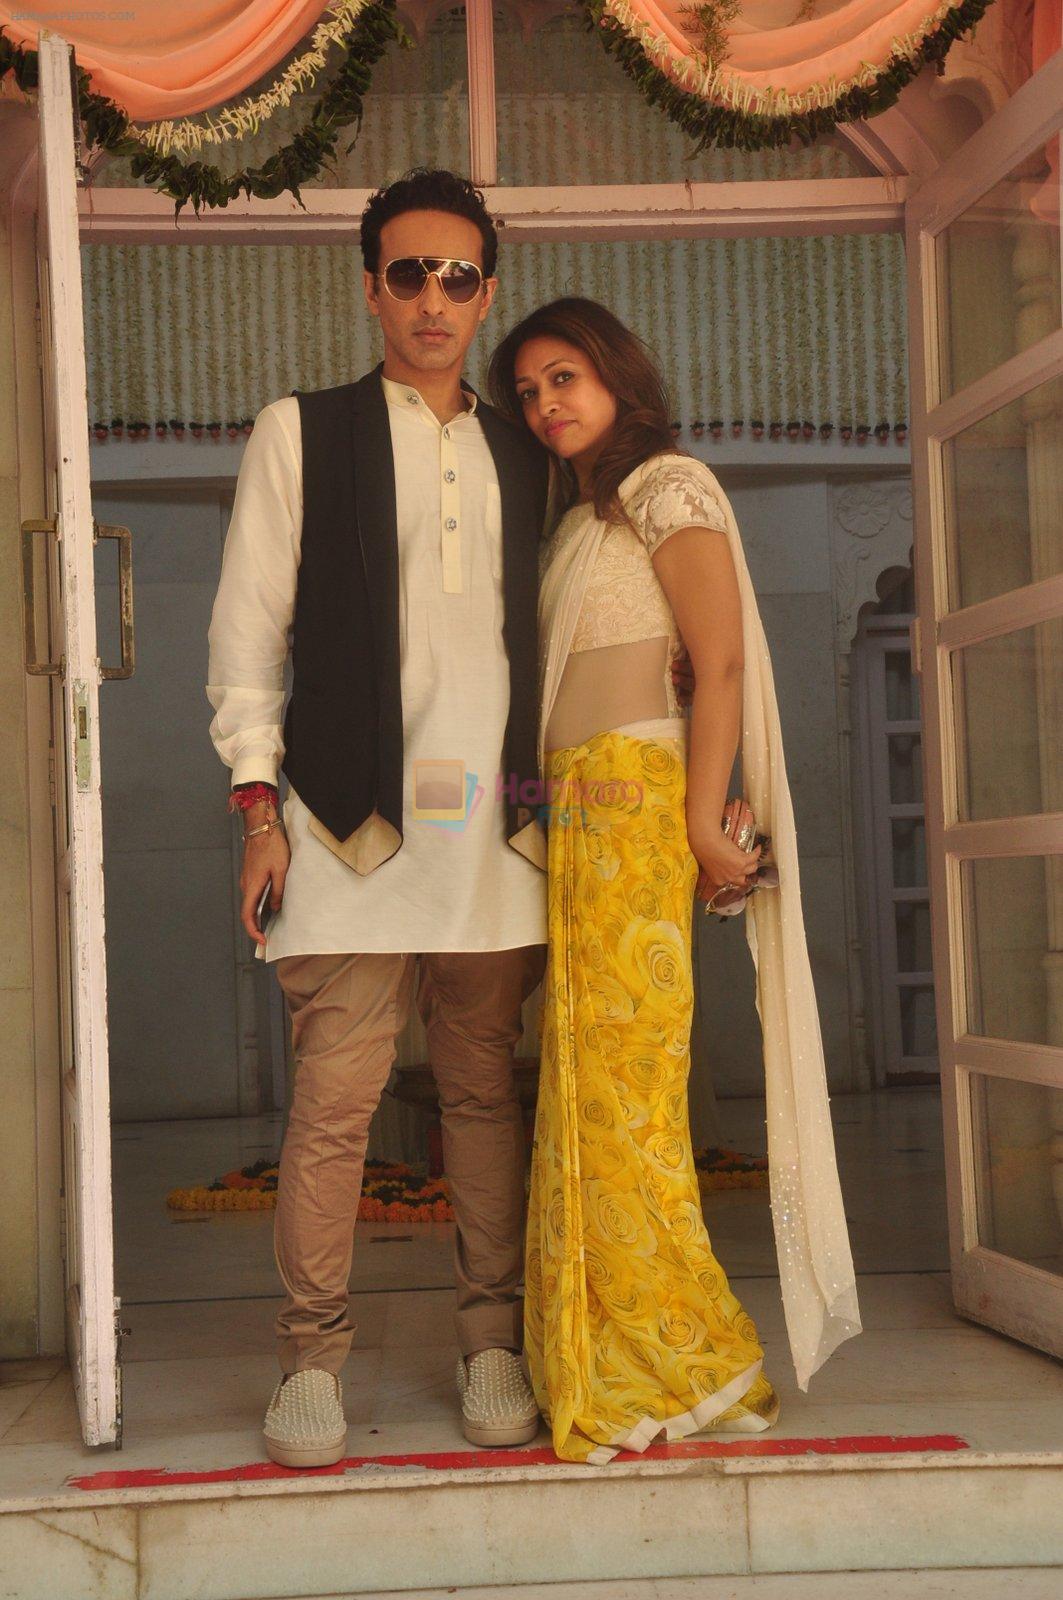 Surily Goel at Abhishek Kapoor & Pragya Yadav Wedding at Isckon temple on 3rd May 2015